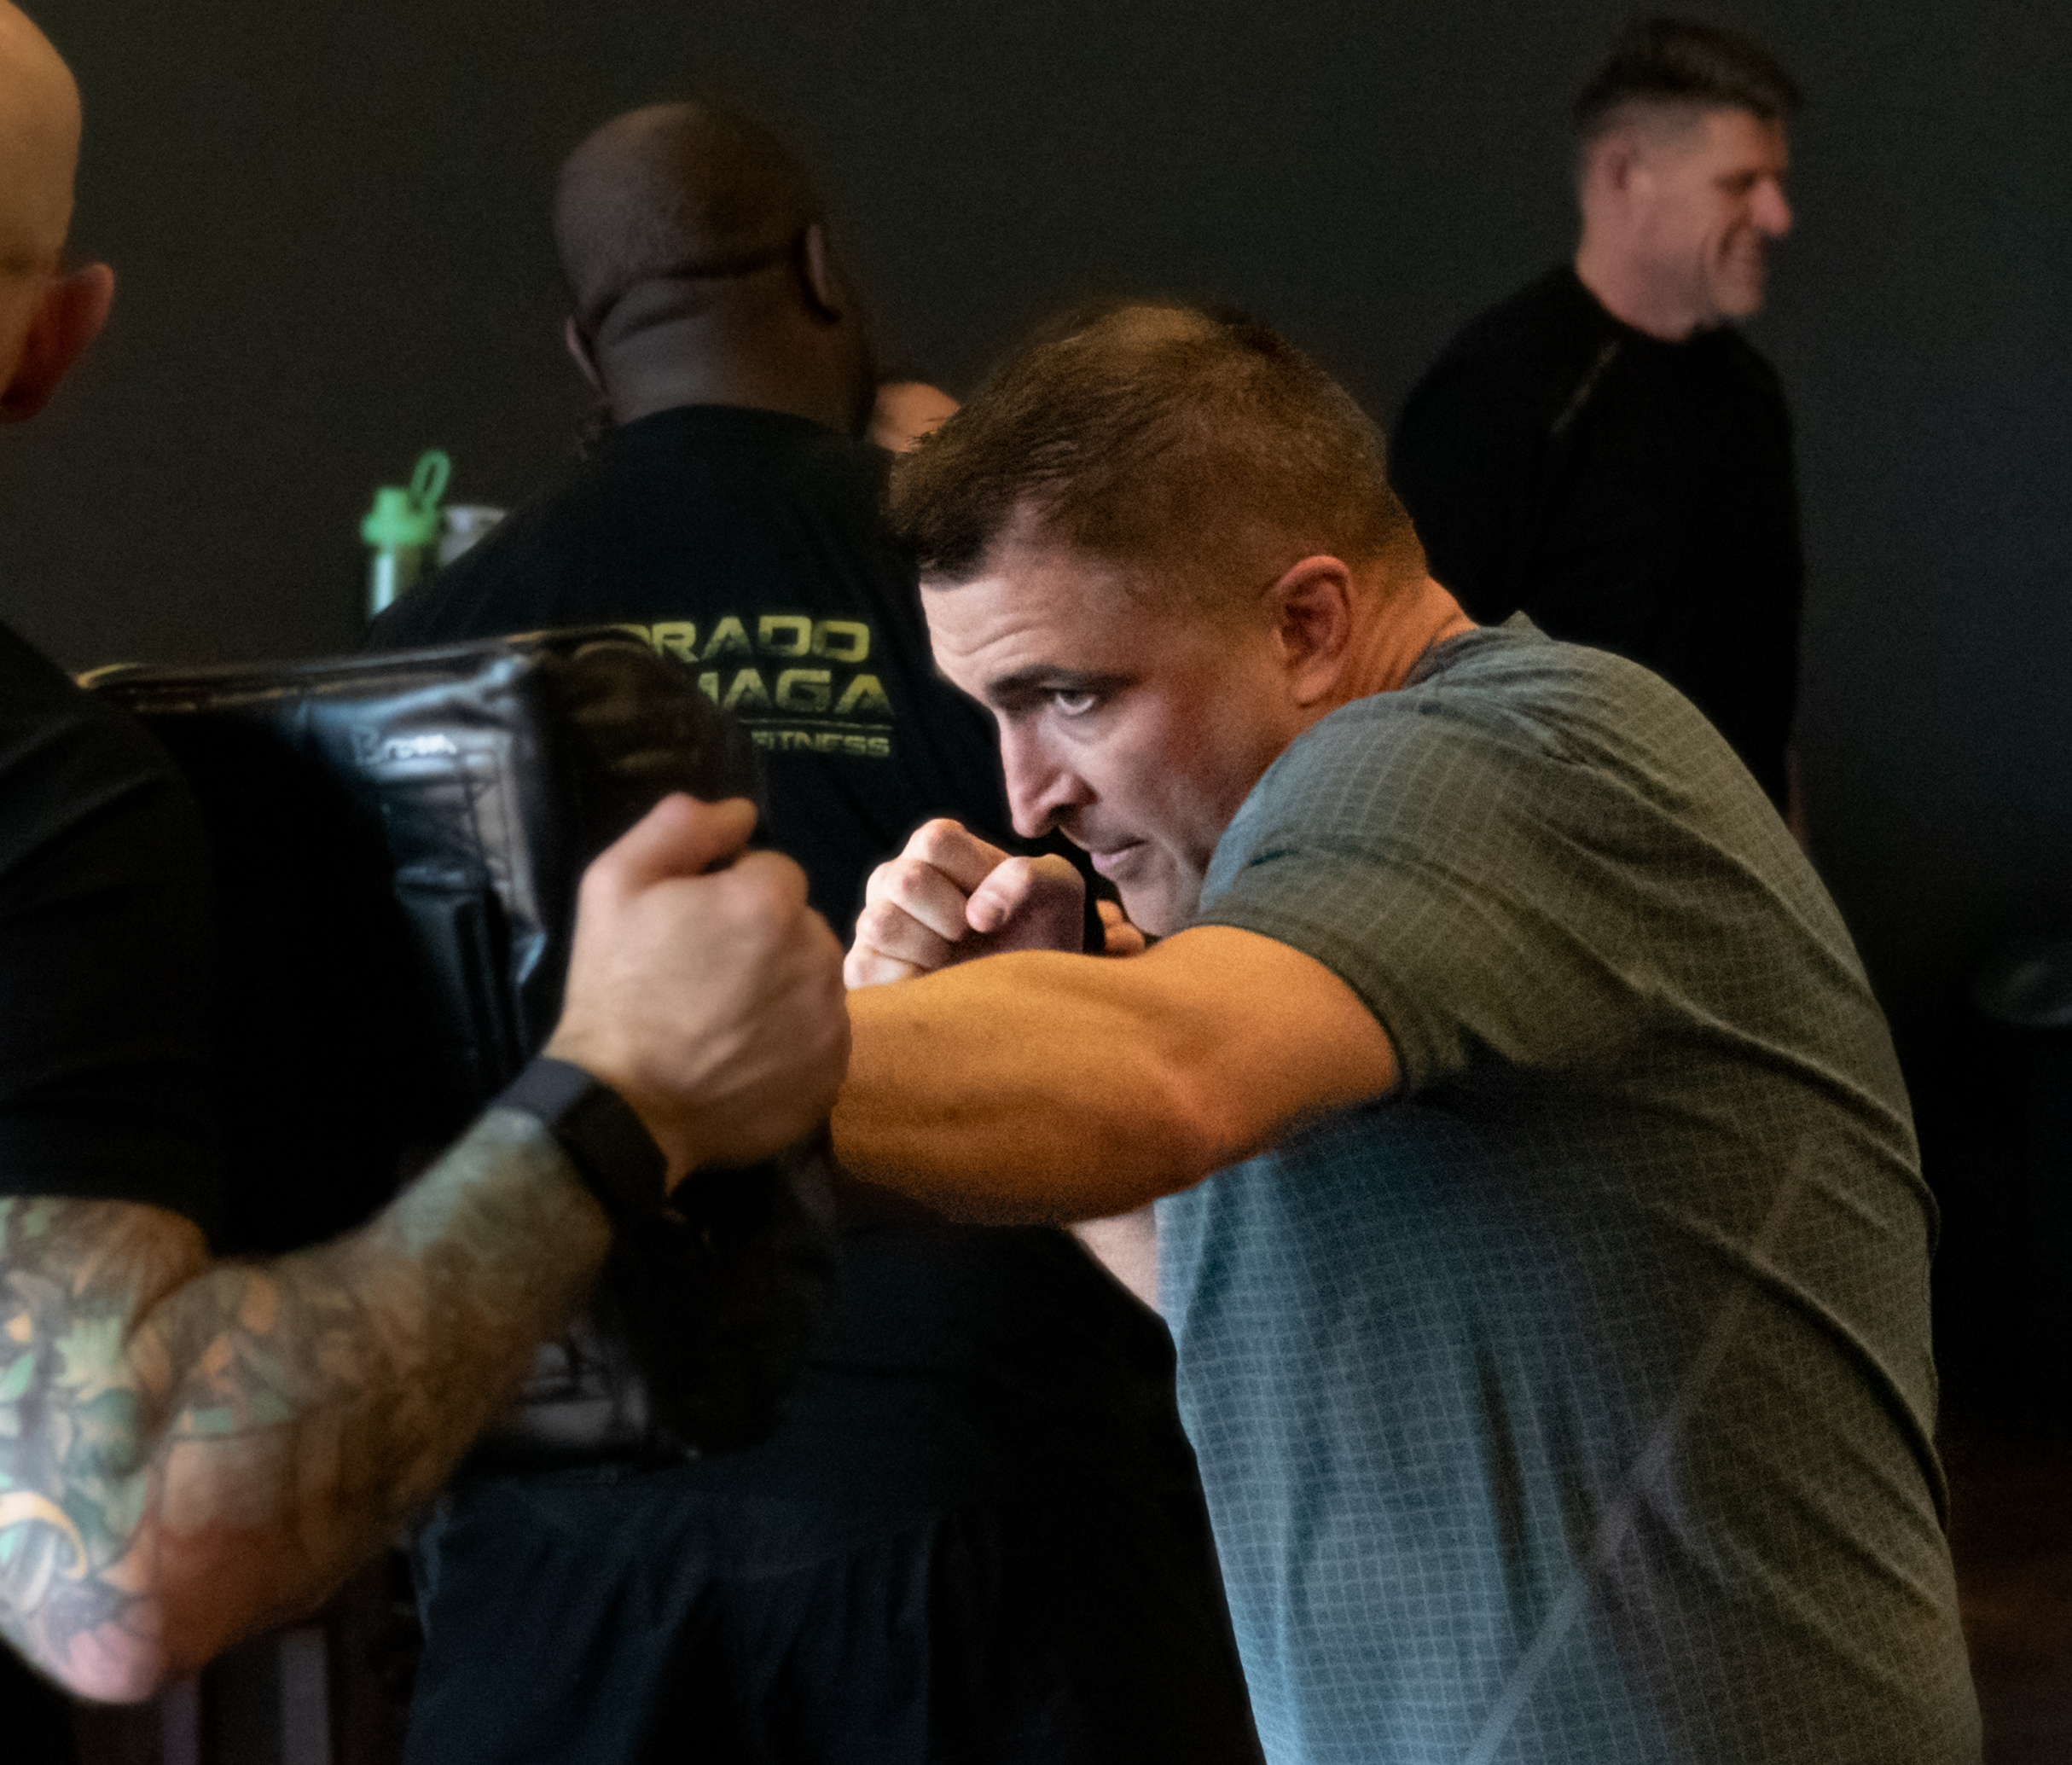 A photo of E.Z. punching during a Krav Maga class